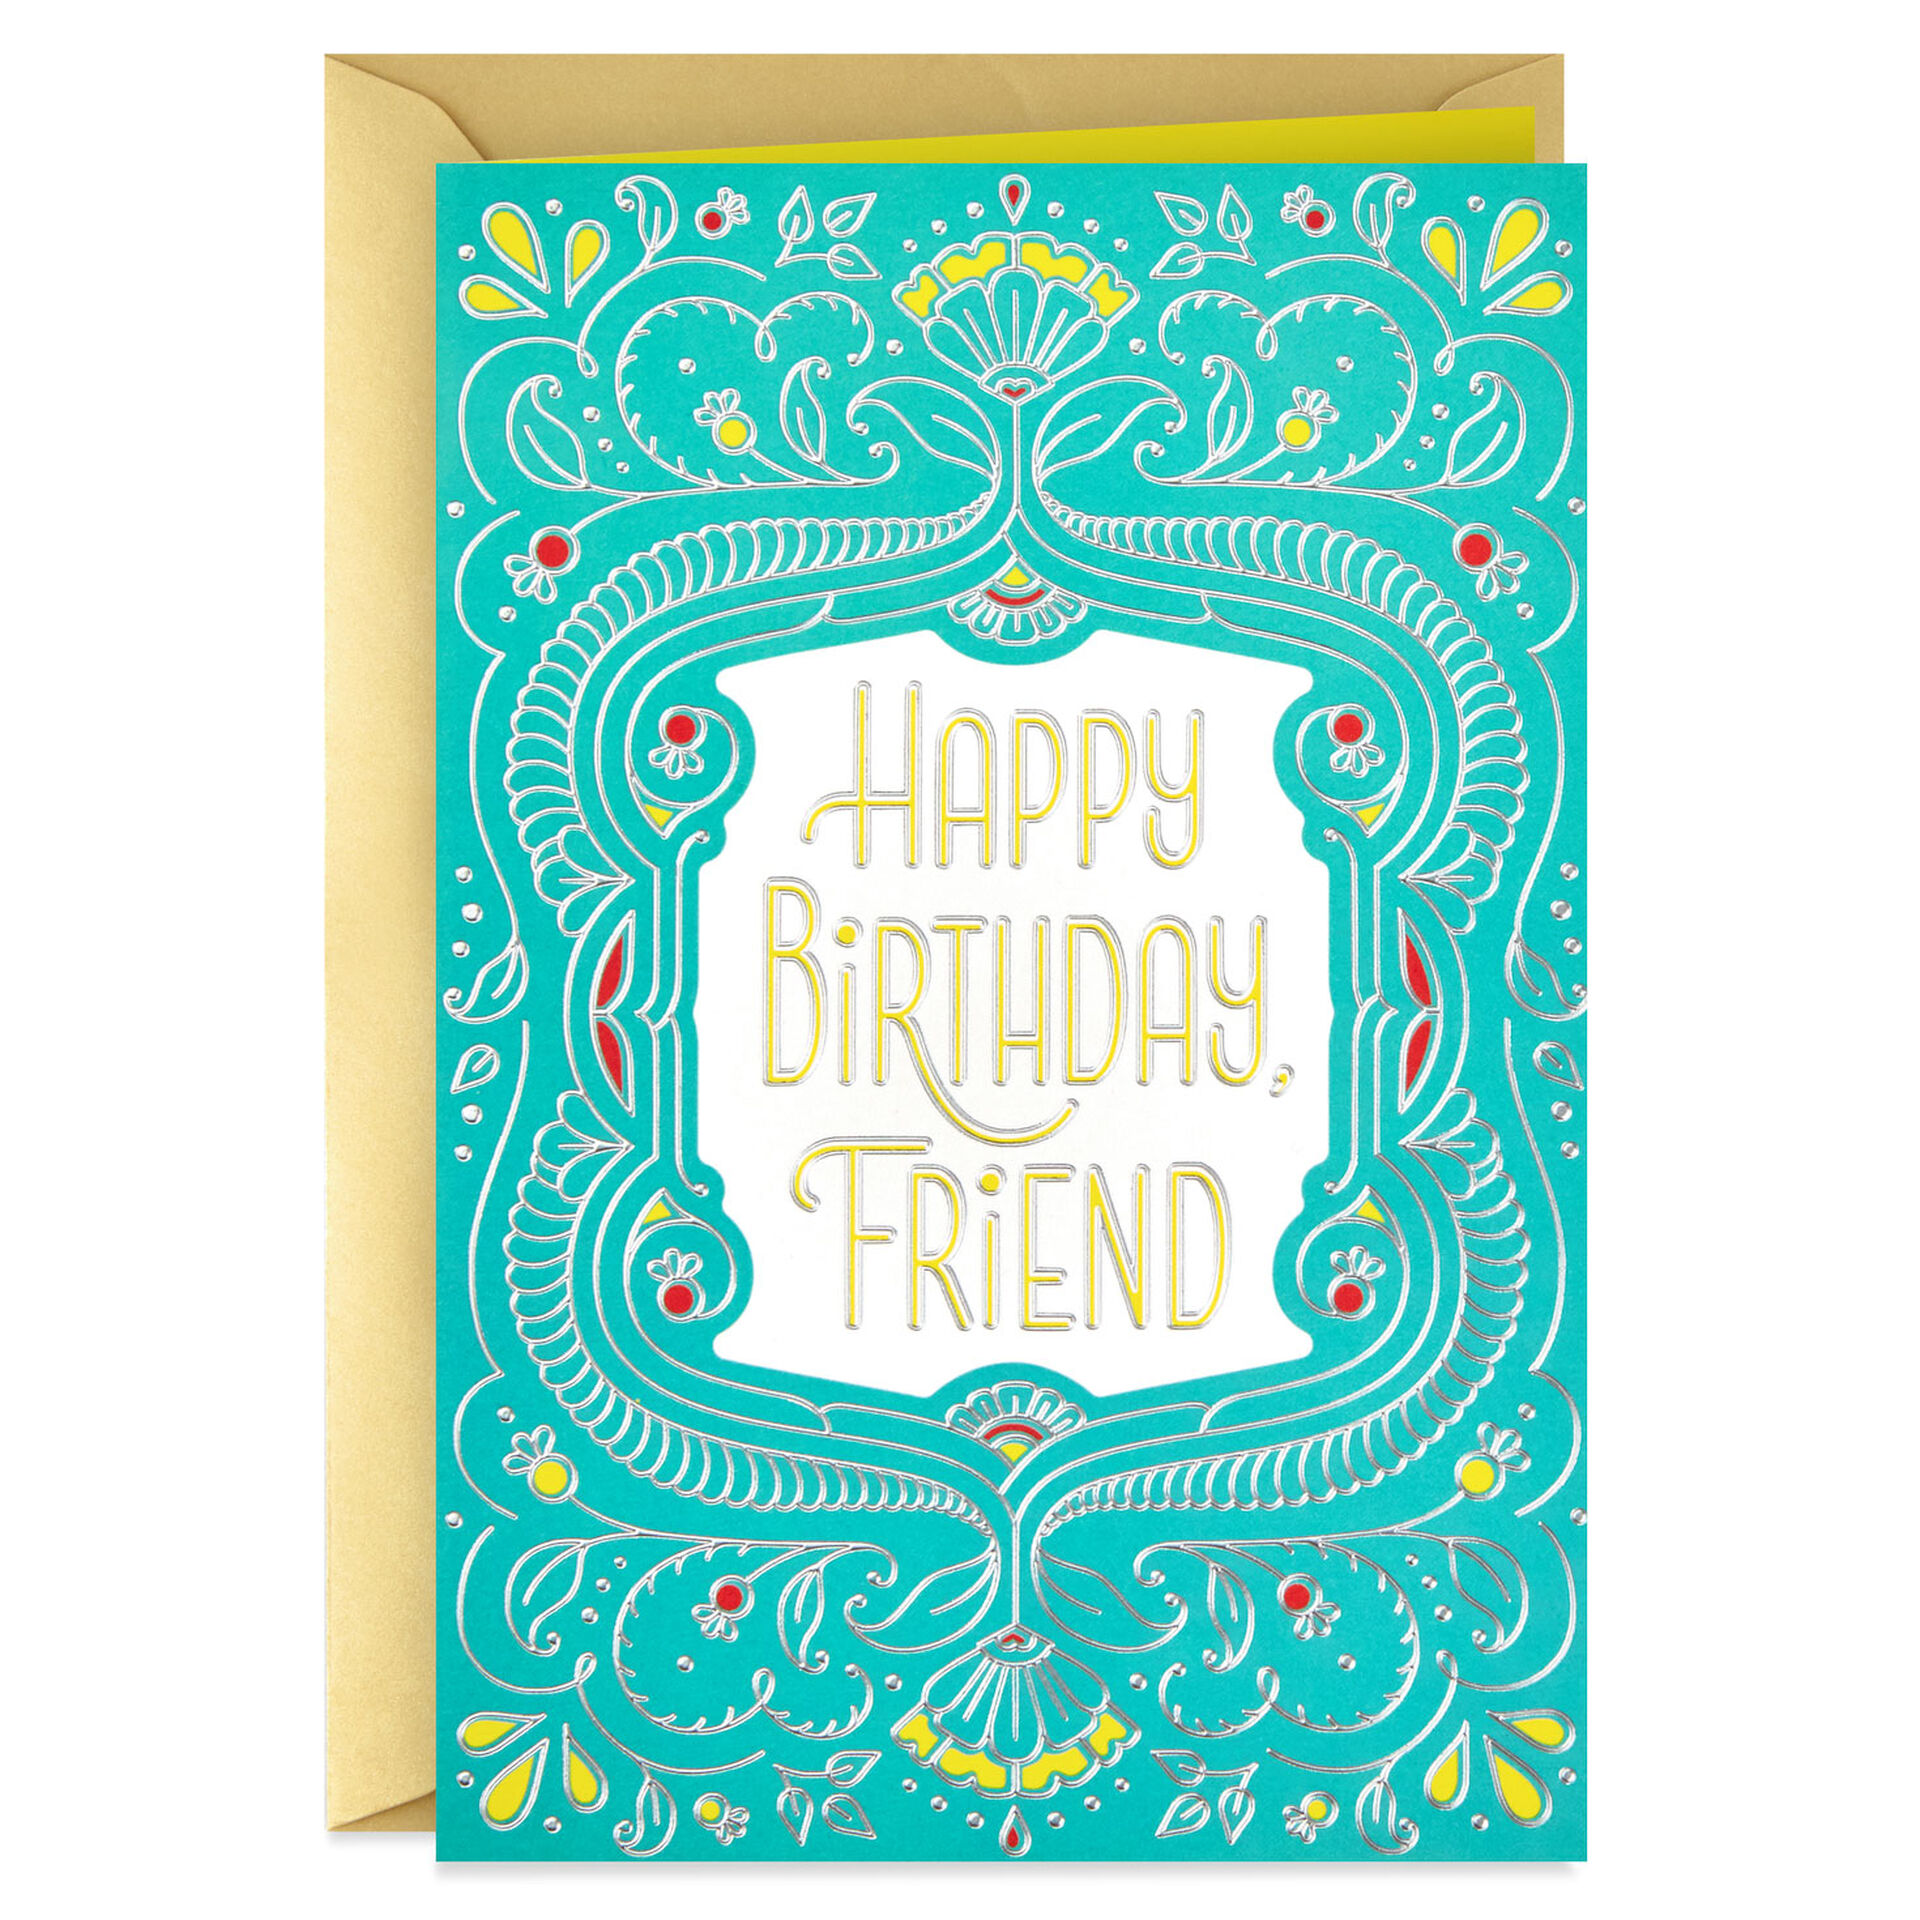 Flower-Line-Work-Special-Friend-Birthday-Card_399SAW3040_01